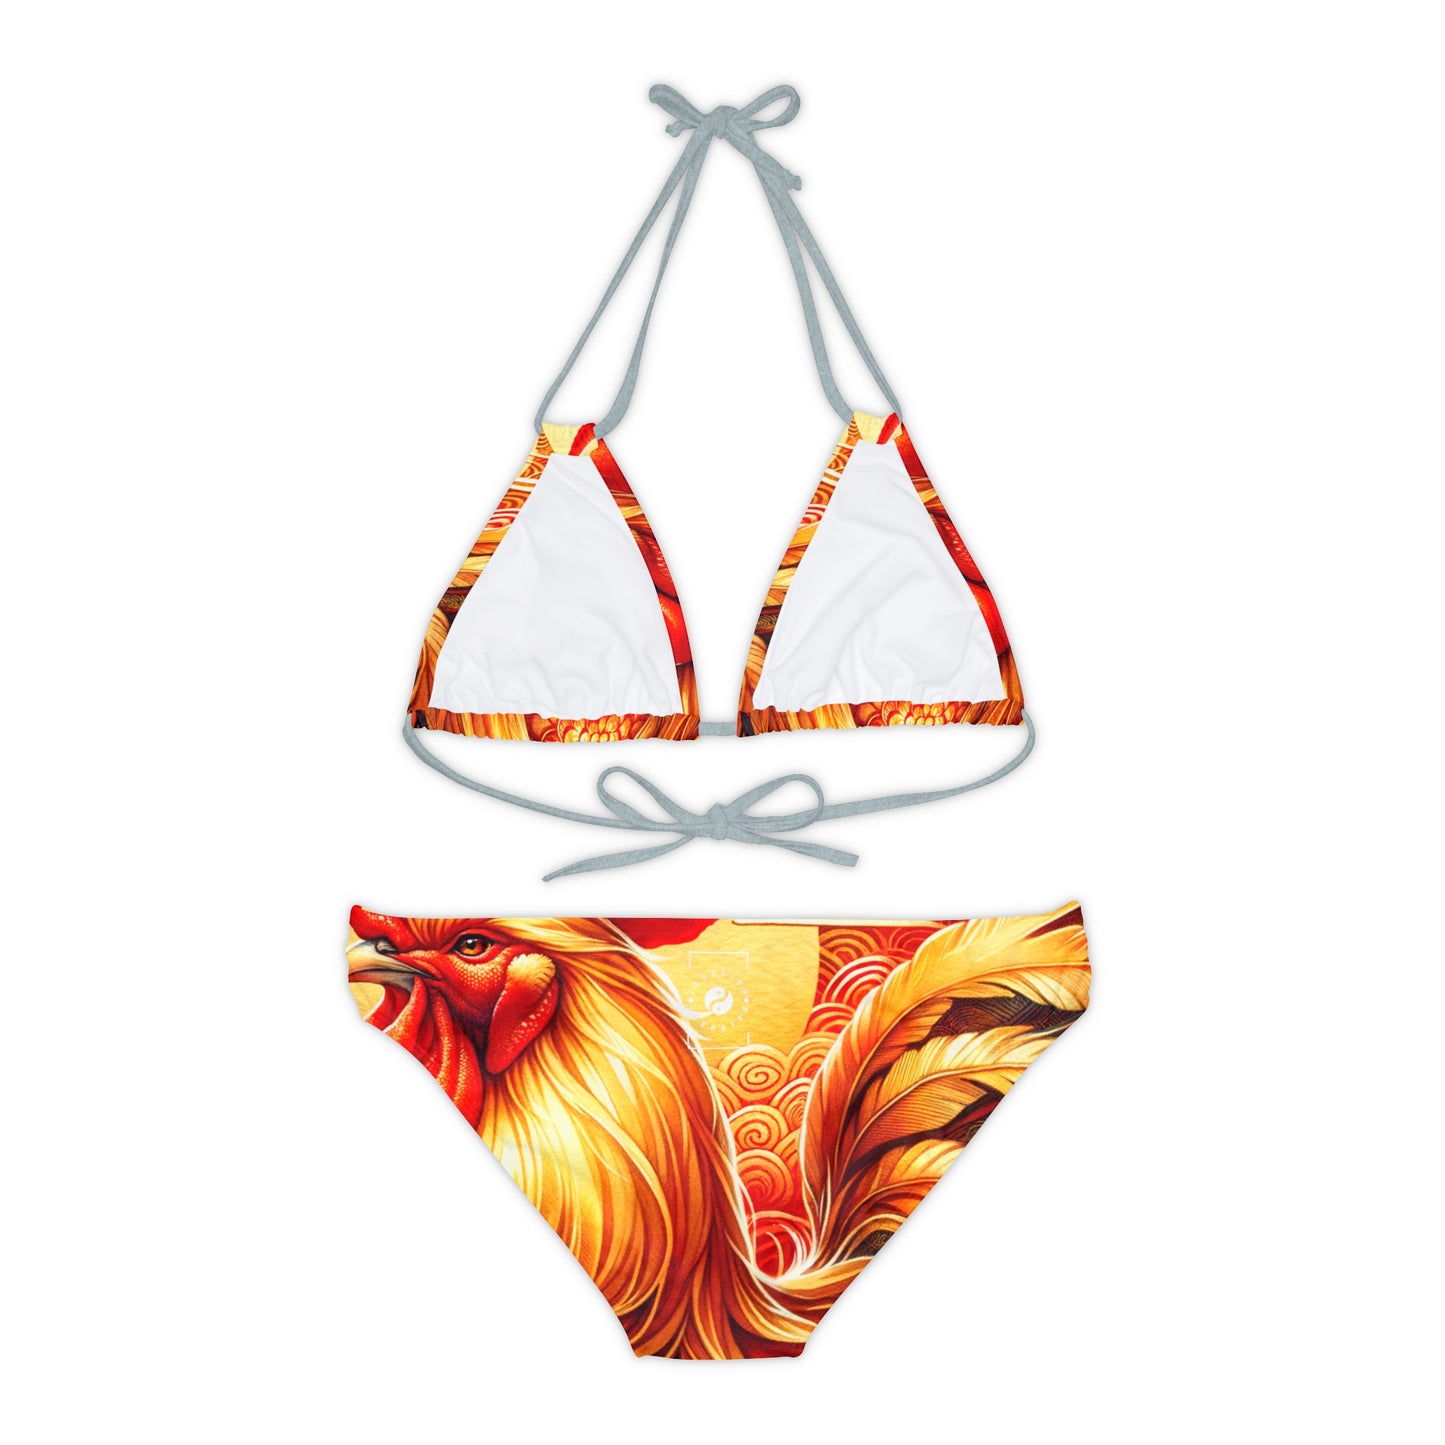 "Crimson Dawn: The Golden Rooster's Rebirth" - Lace-up Bikini Set